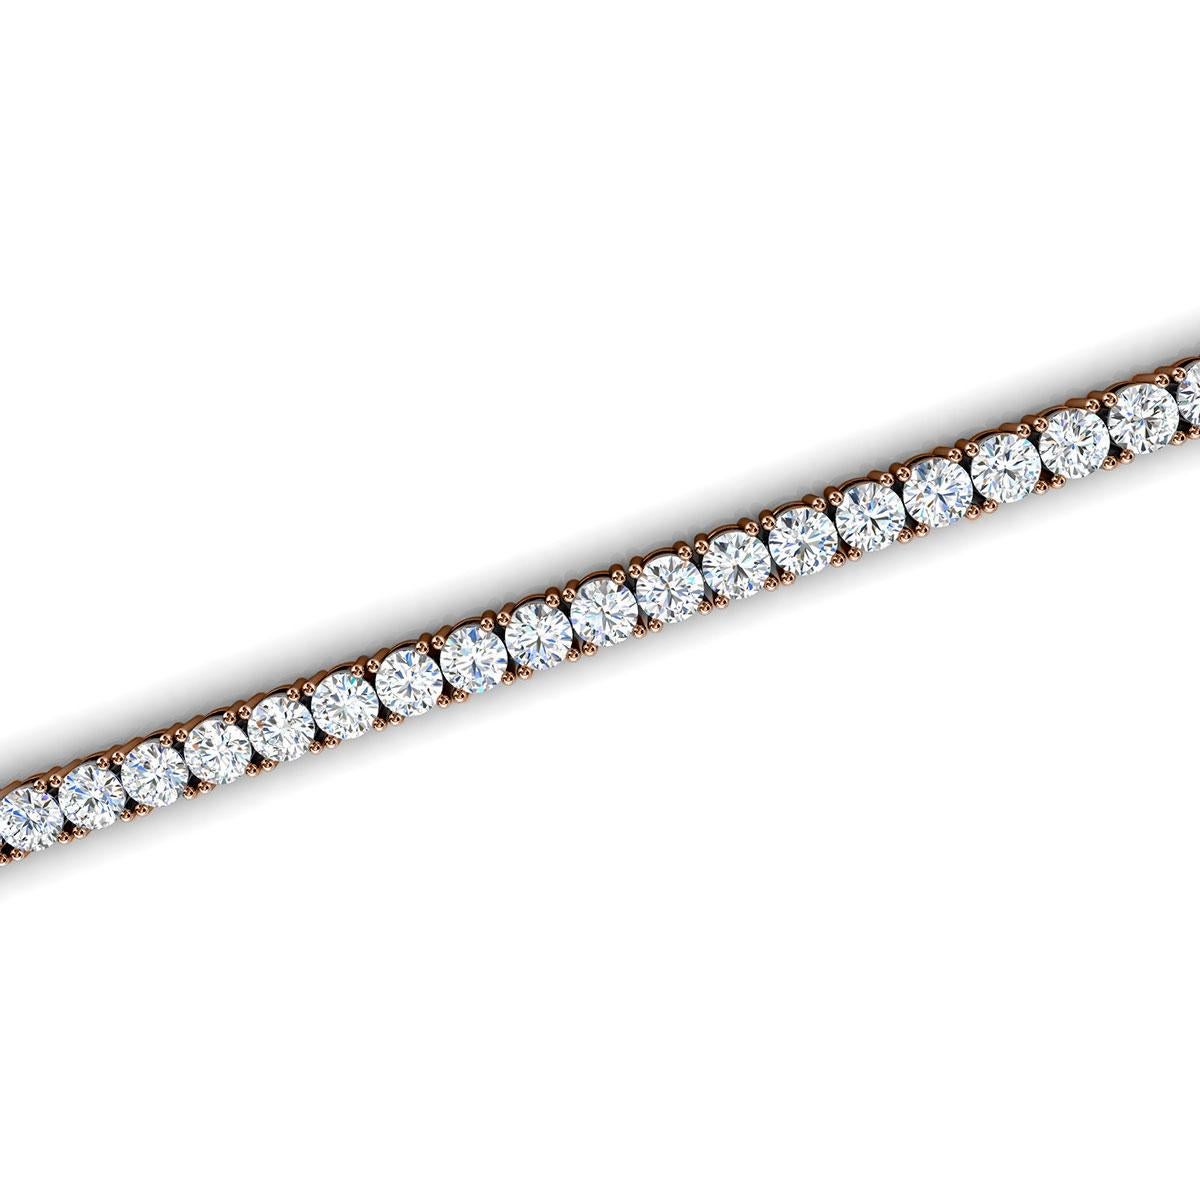 7ct diamond tennis bracelet